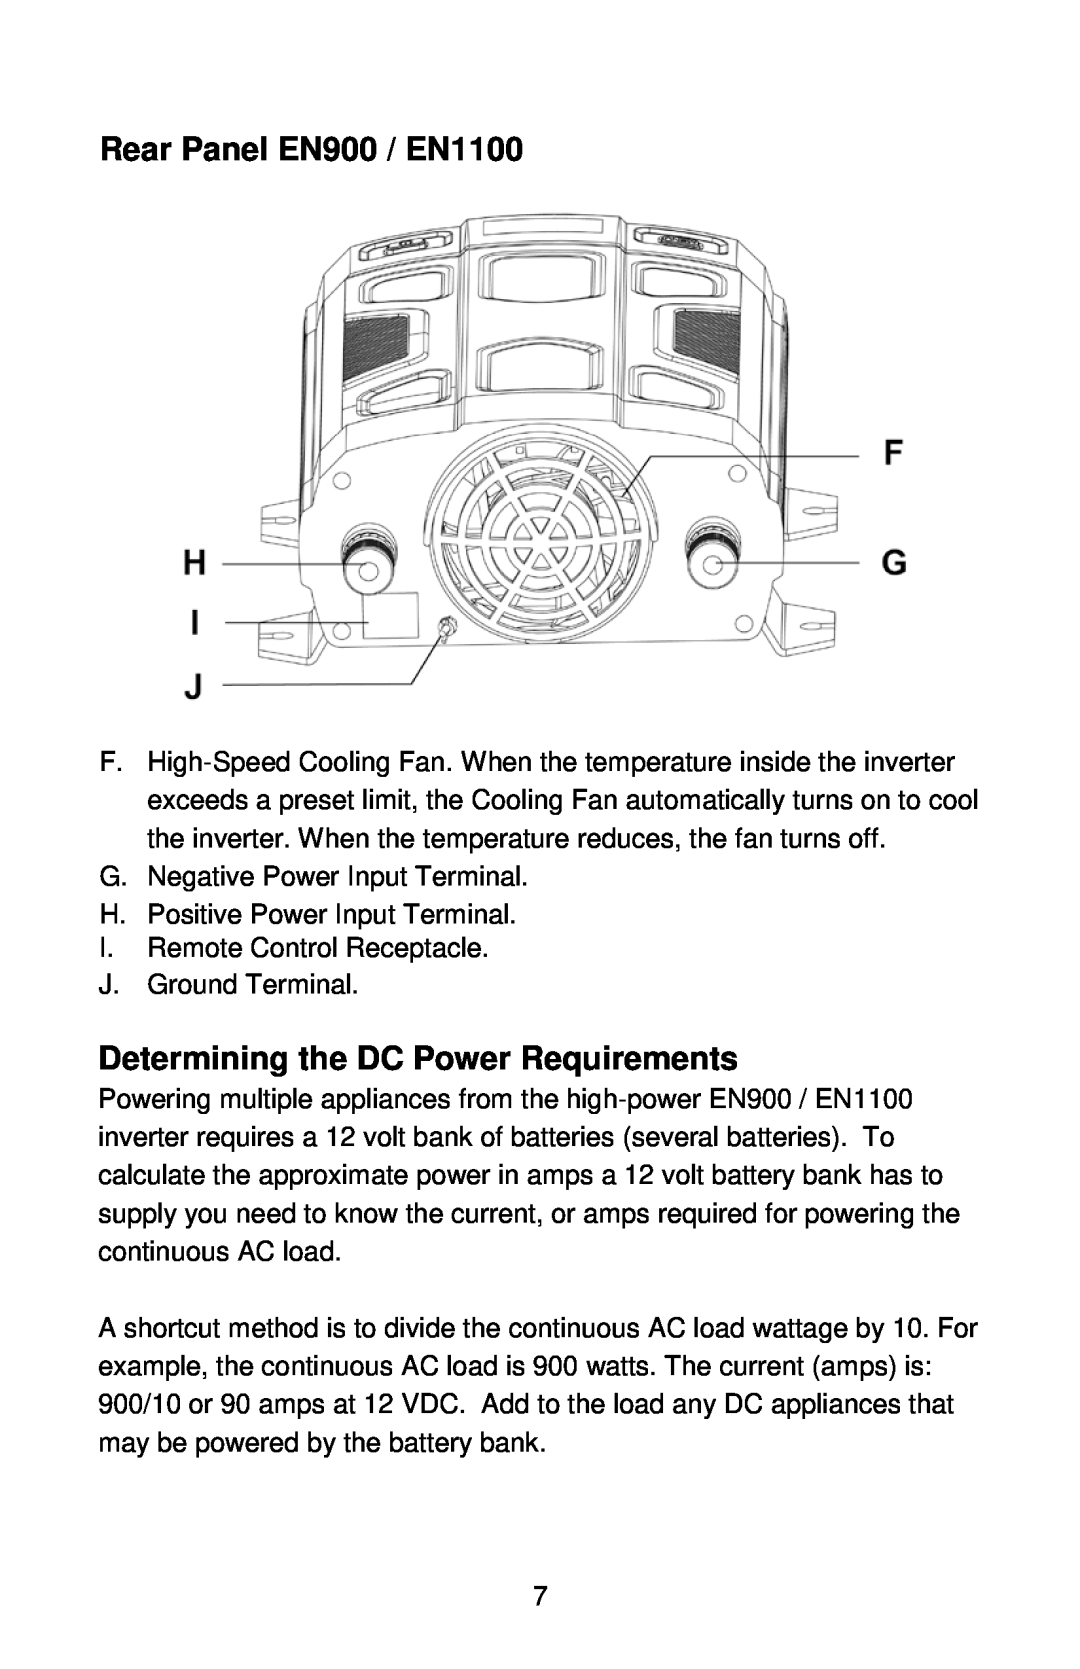 Energizer manual Rear Panel EN900 / EN1100, Determining the DC Power Requirements 